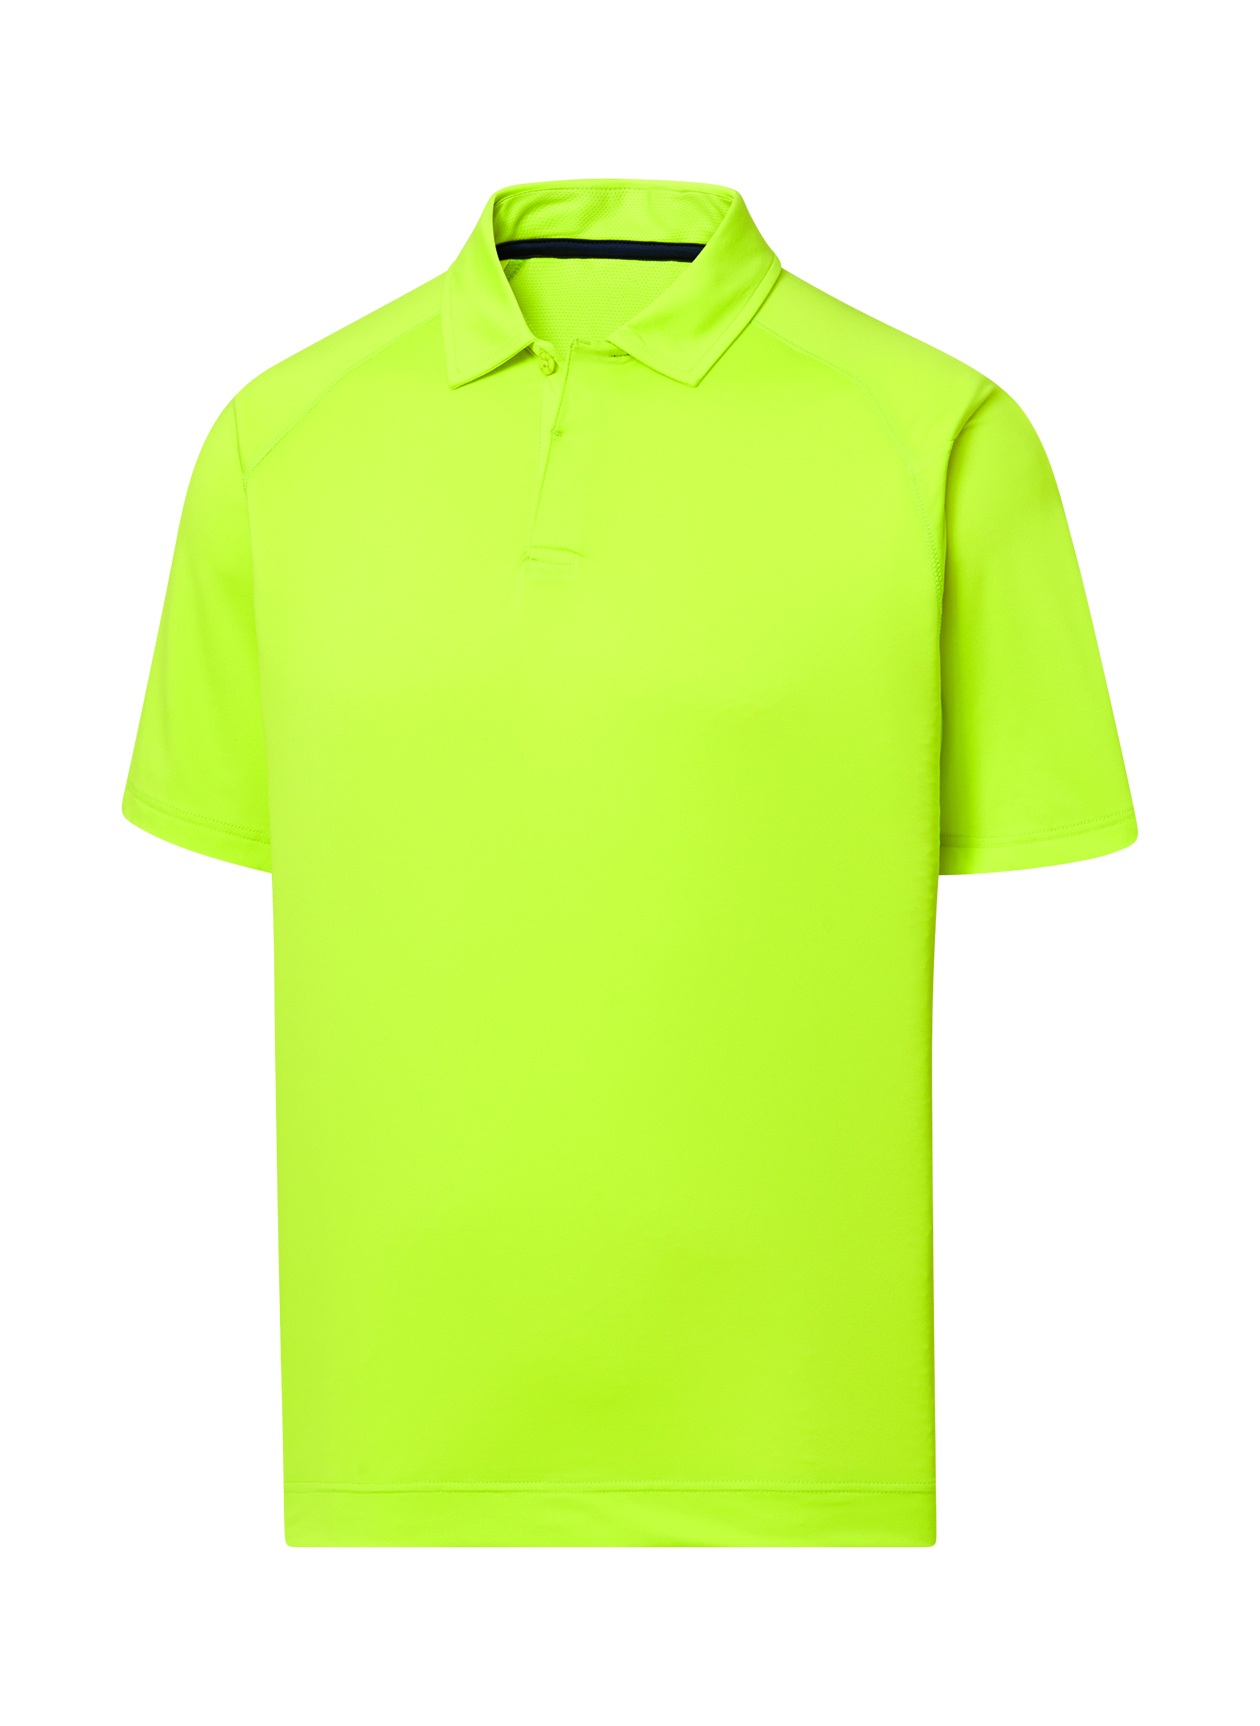 FootJoy Men's Neon Yellow HYPR Golf Polo